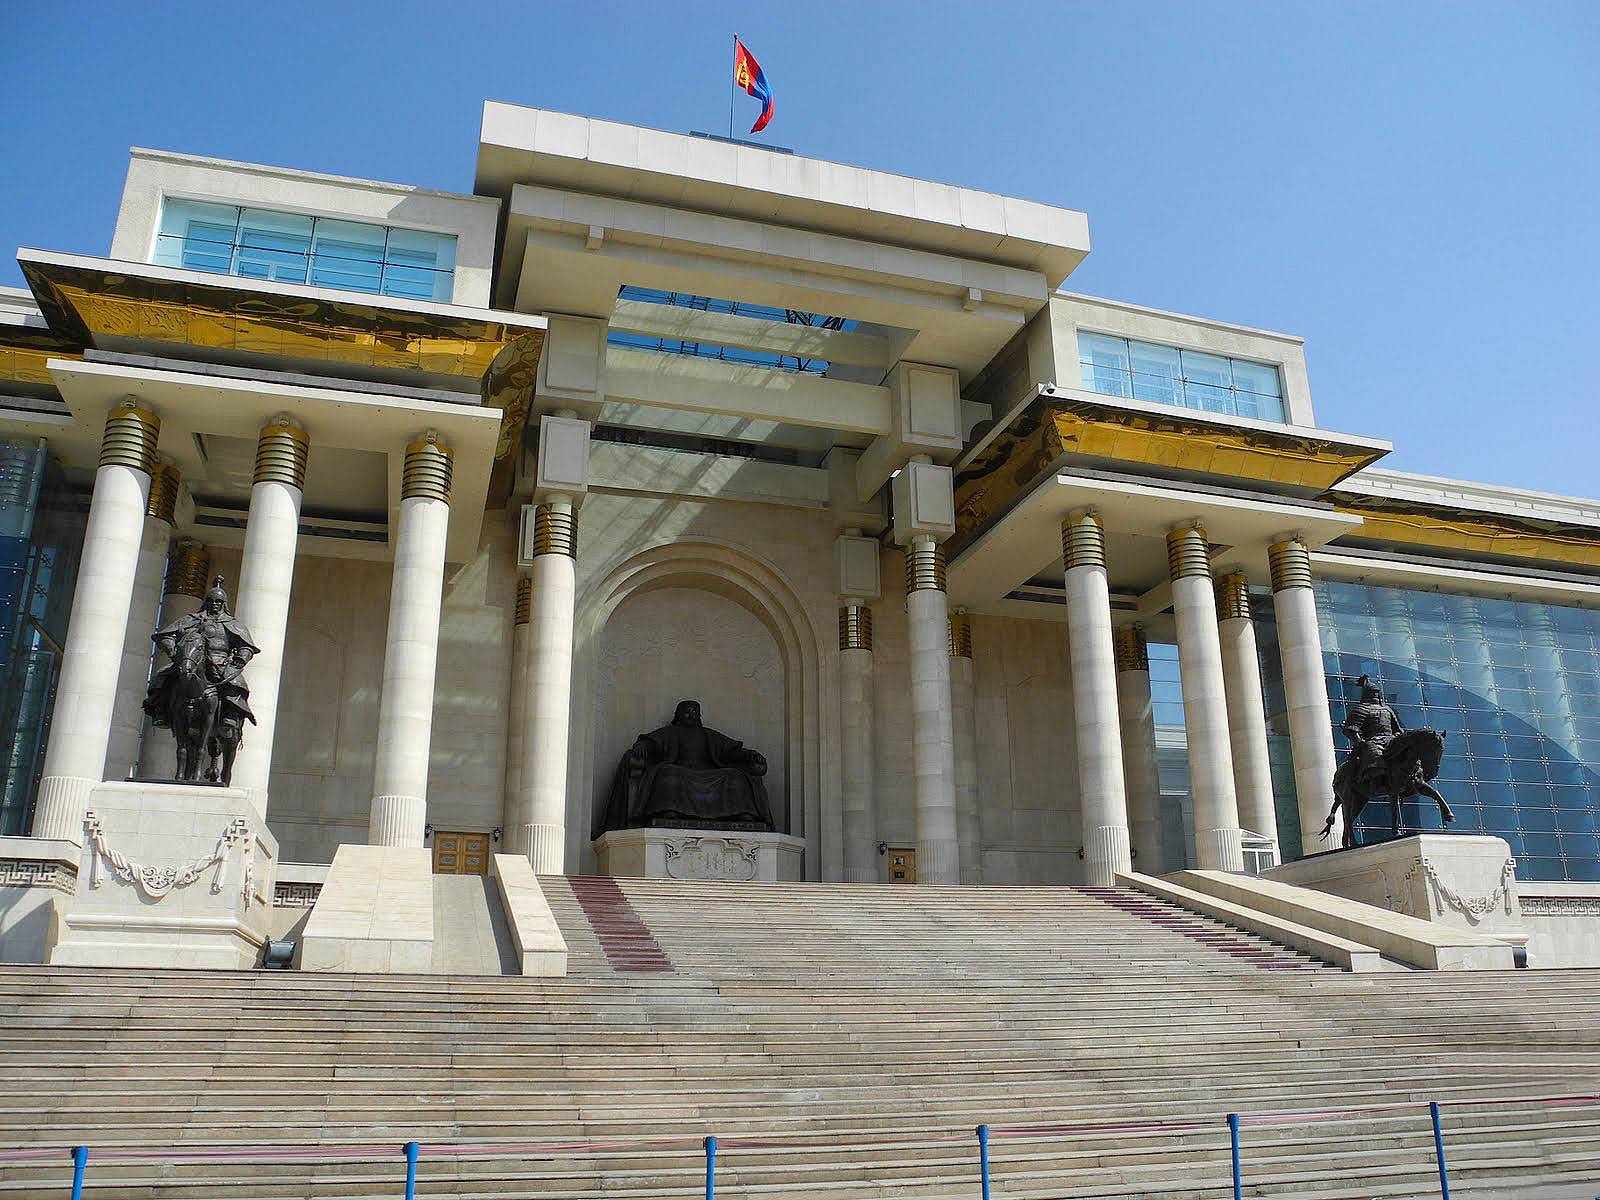 Arrivo a Ulaanbatar, visita guidata della capitale